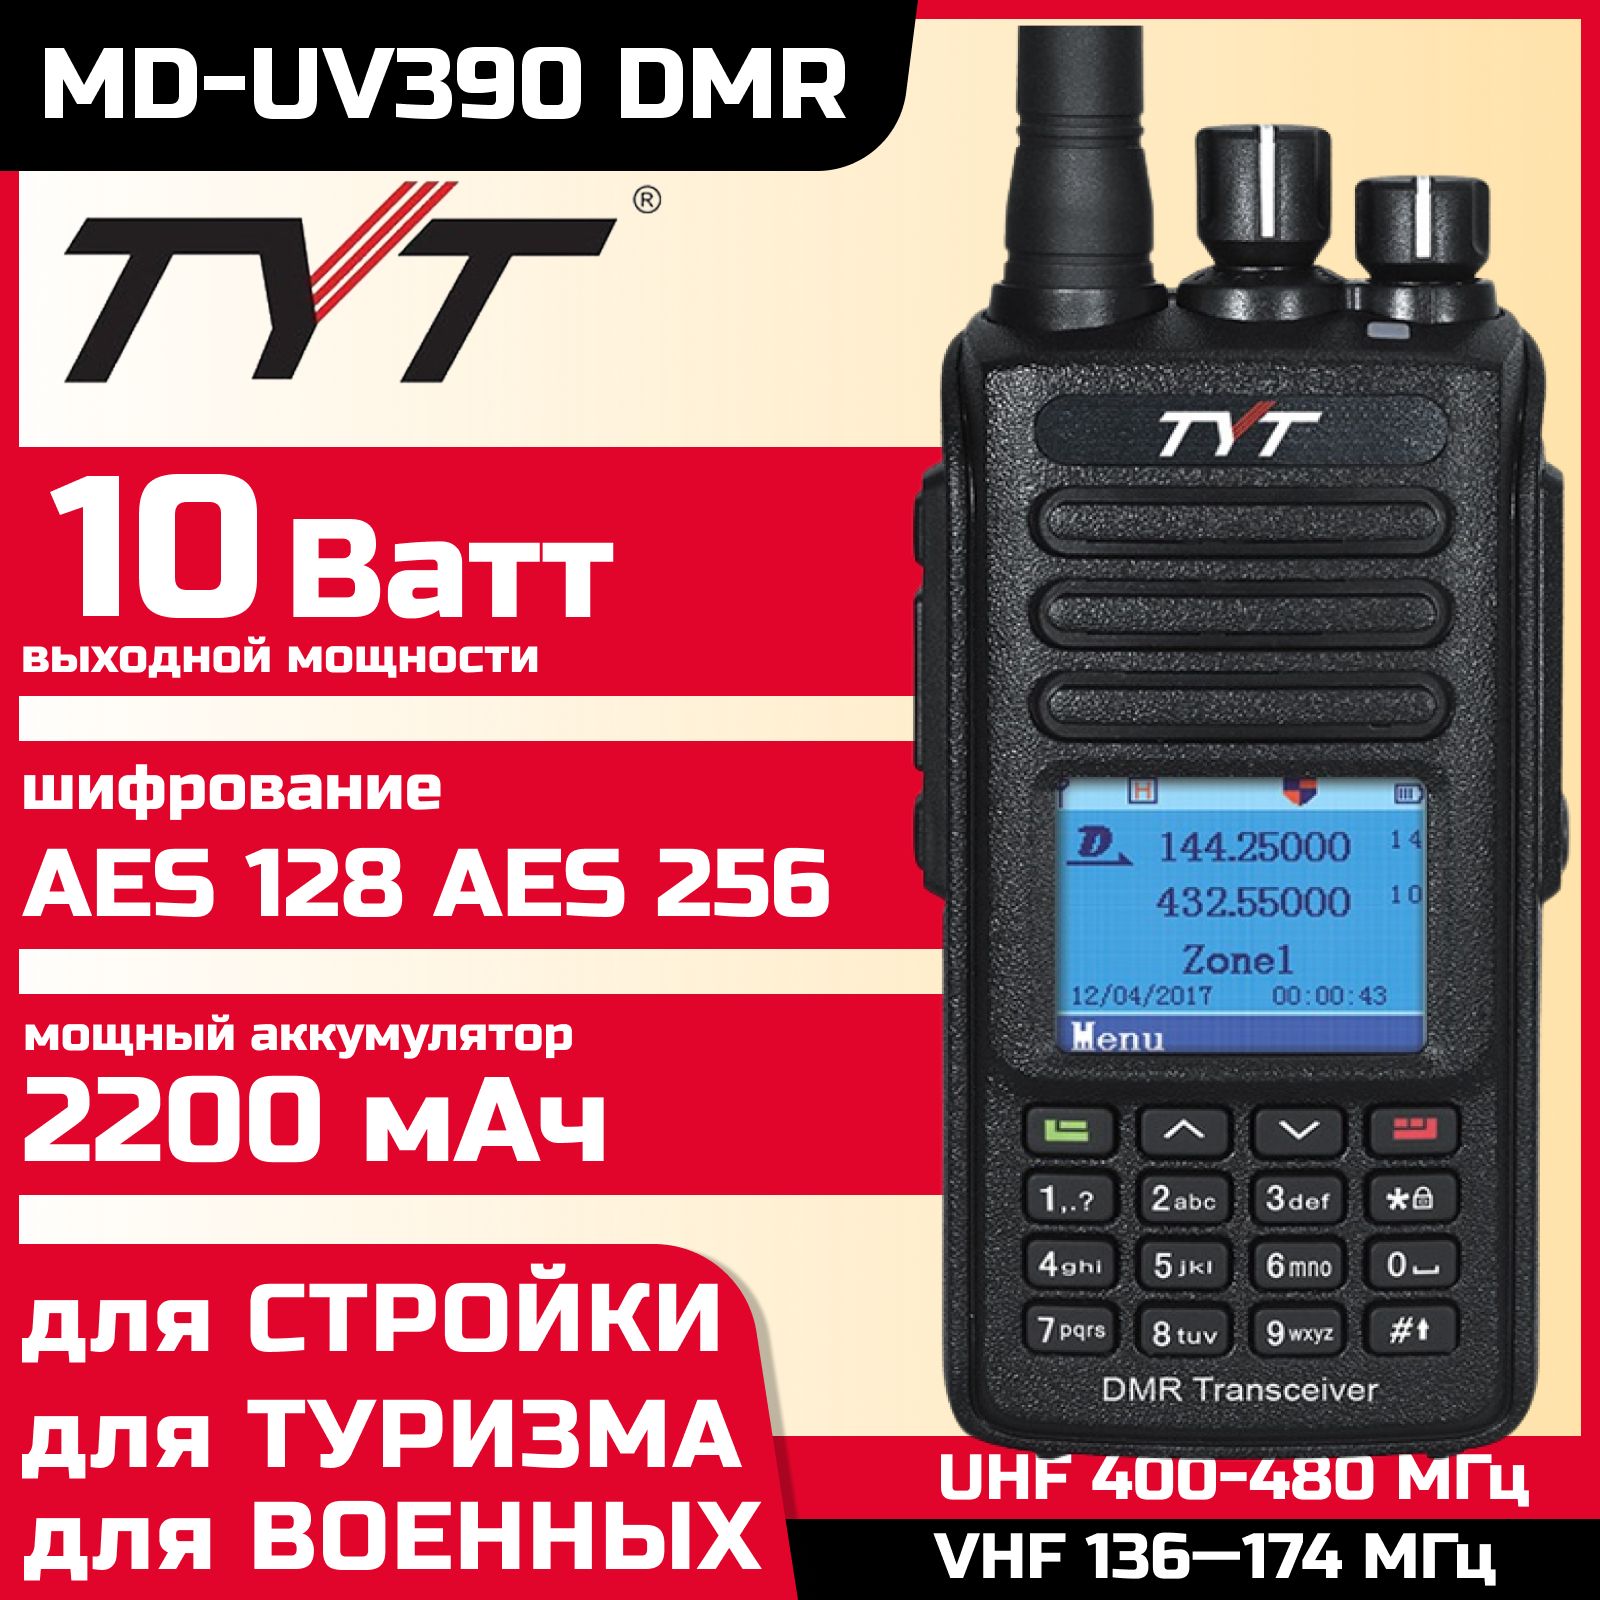 Радиостанция 390. Радиостанция TYT MD-uv390. TYT MD-uv390 DMR. TYT MD-uv390 Plus. Курск рация tut uv390 DMR.